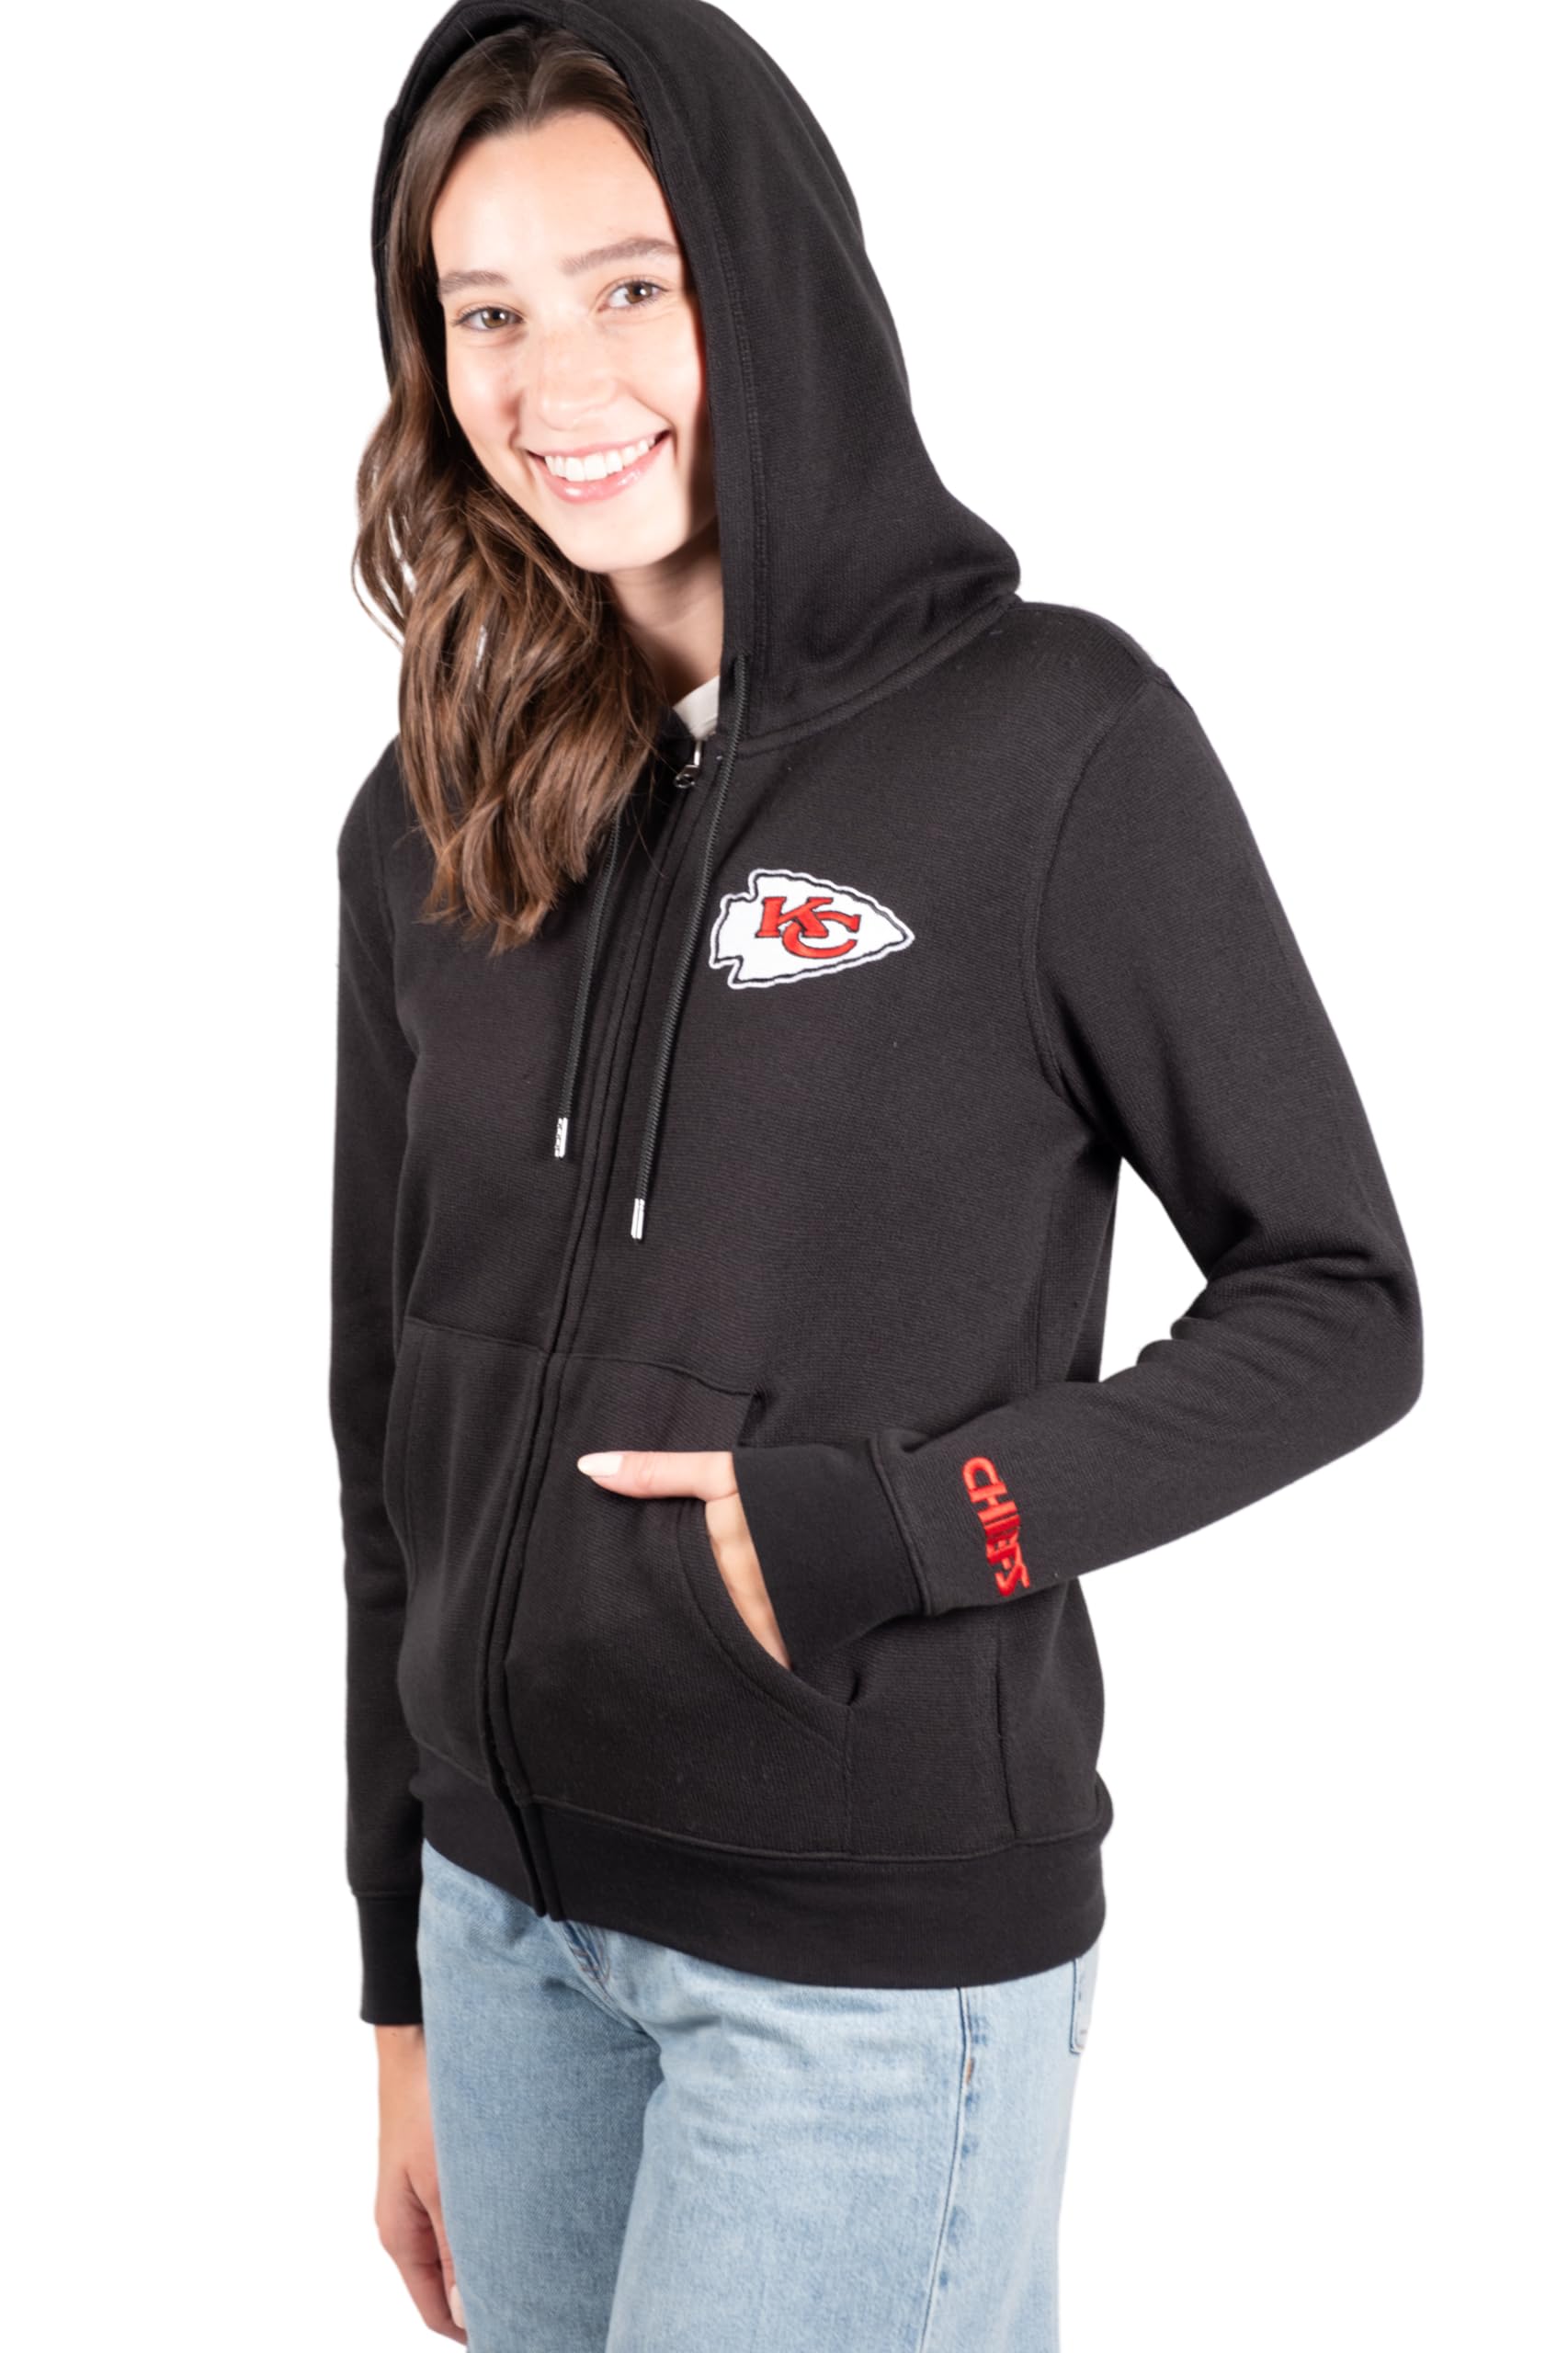 Ultra Game NFL Kansas City Chiefs Womens Full Zip Soft Marl Knit Hoodie Sweatshirt Jacket|Kansas City Chiefs - UltraGameShop